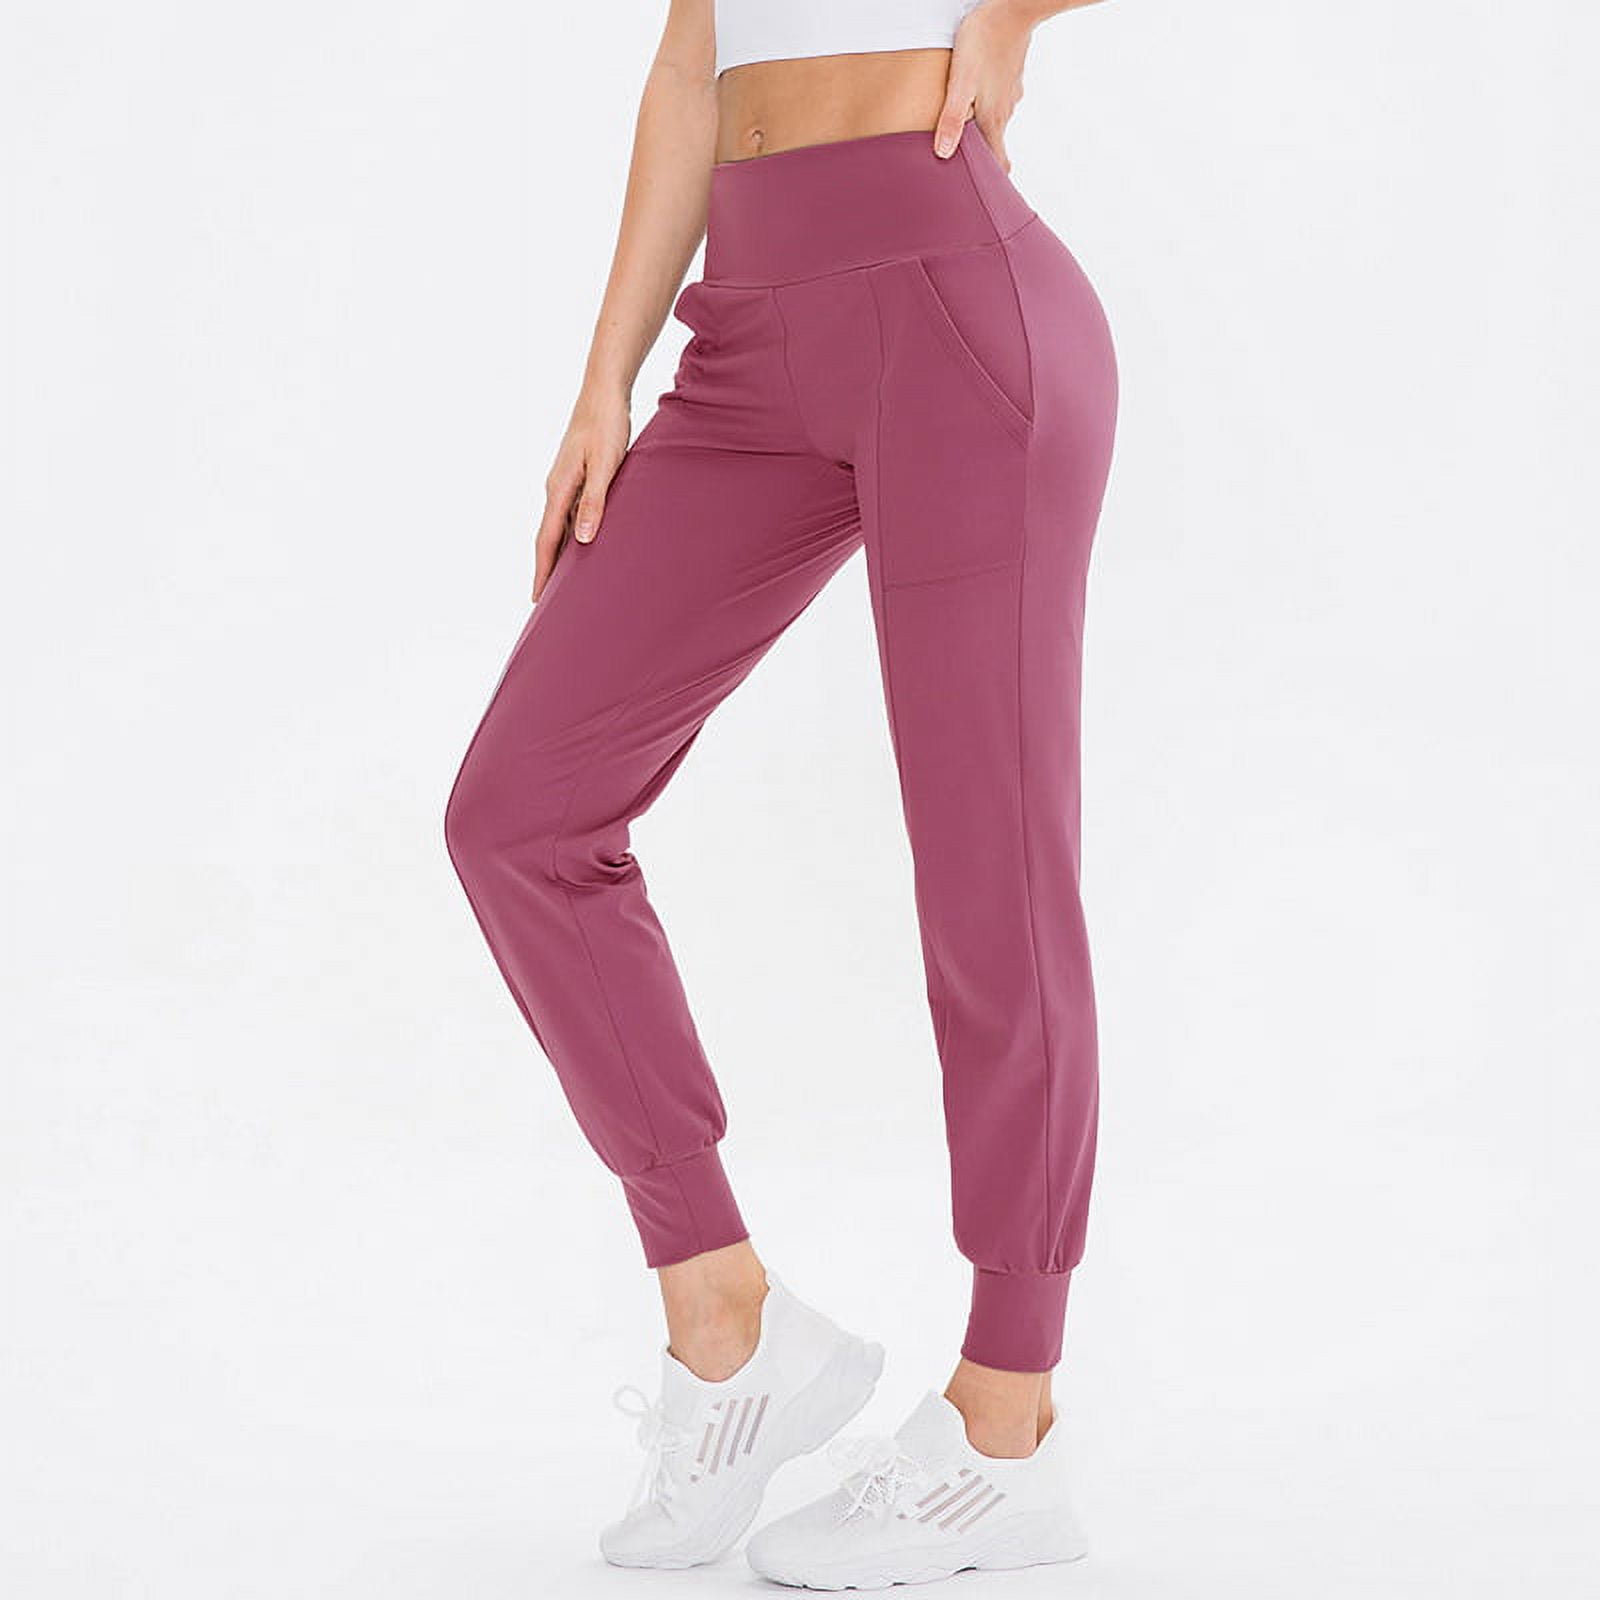 BESTSPR Sweatpants for Women Loose Legged Yoga Pants High Waist Lean Casual  Sports Pants Stretch Training Fitness Pants S-2XL 